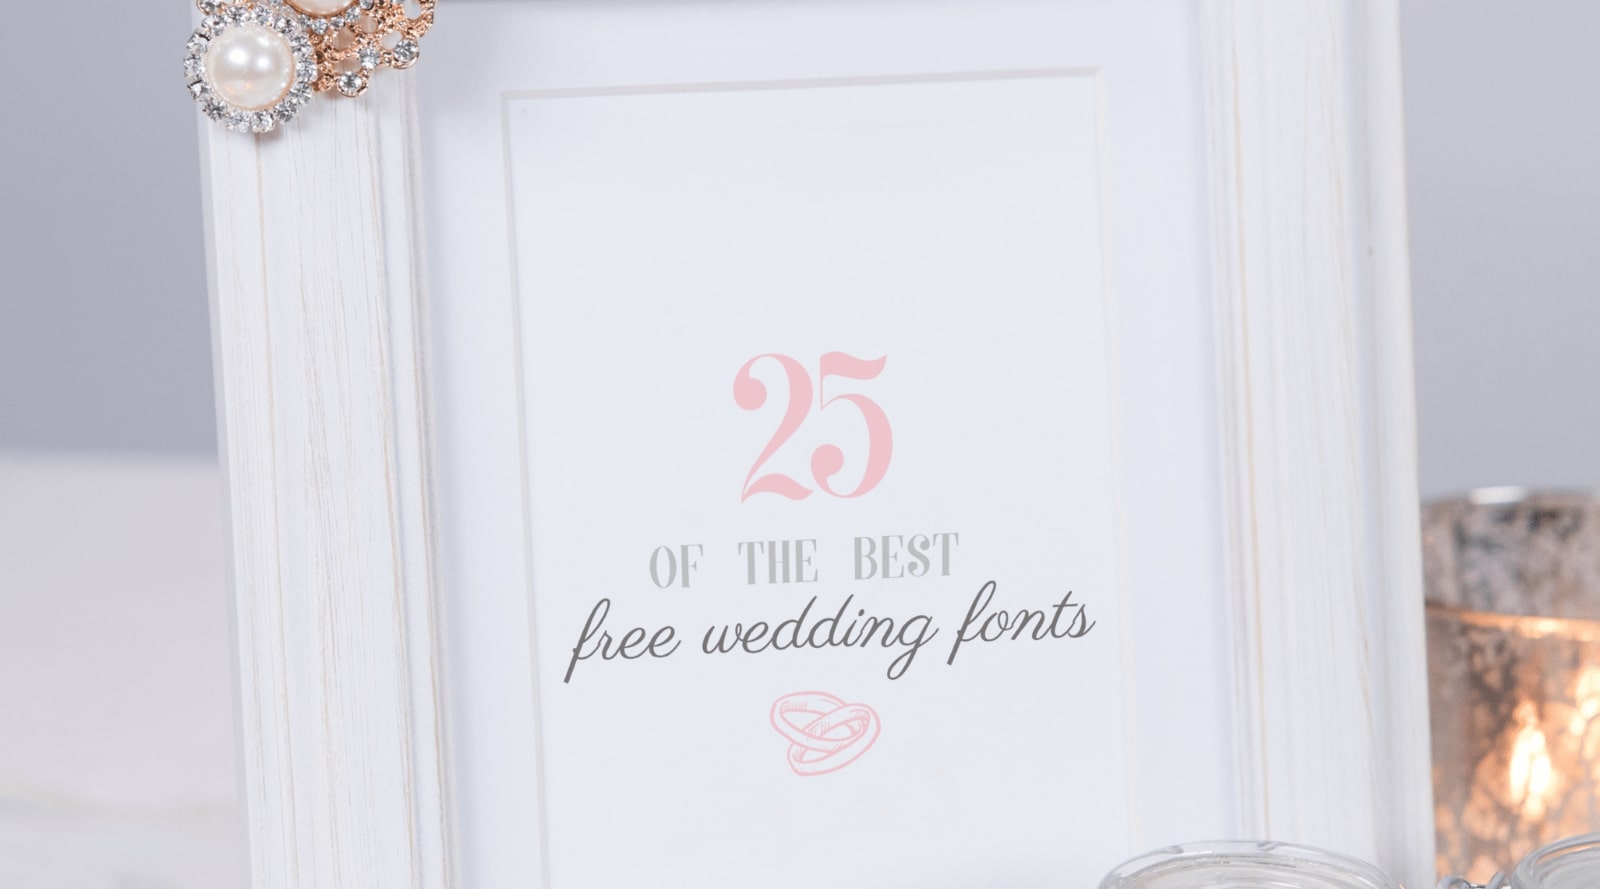 wedding fonts free download